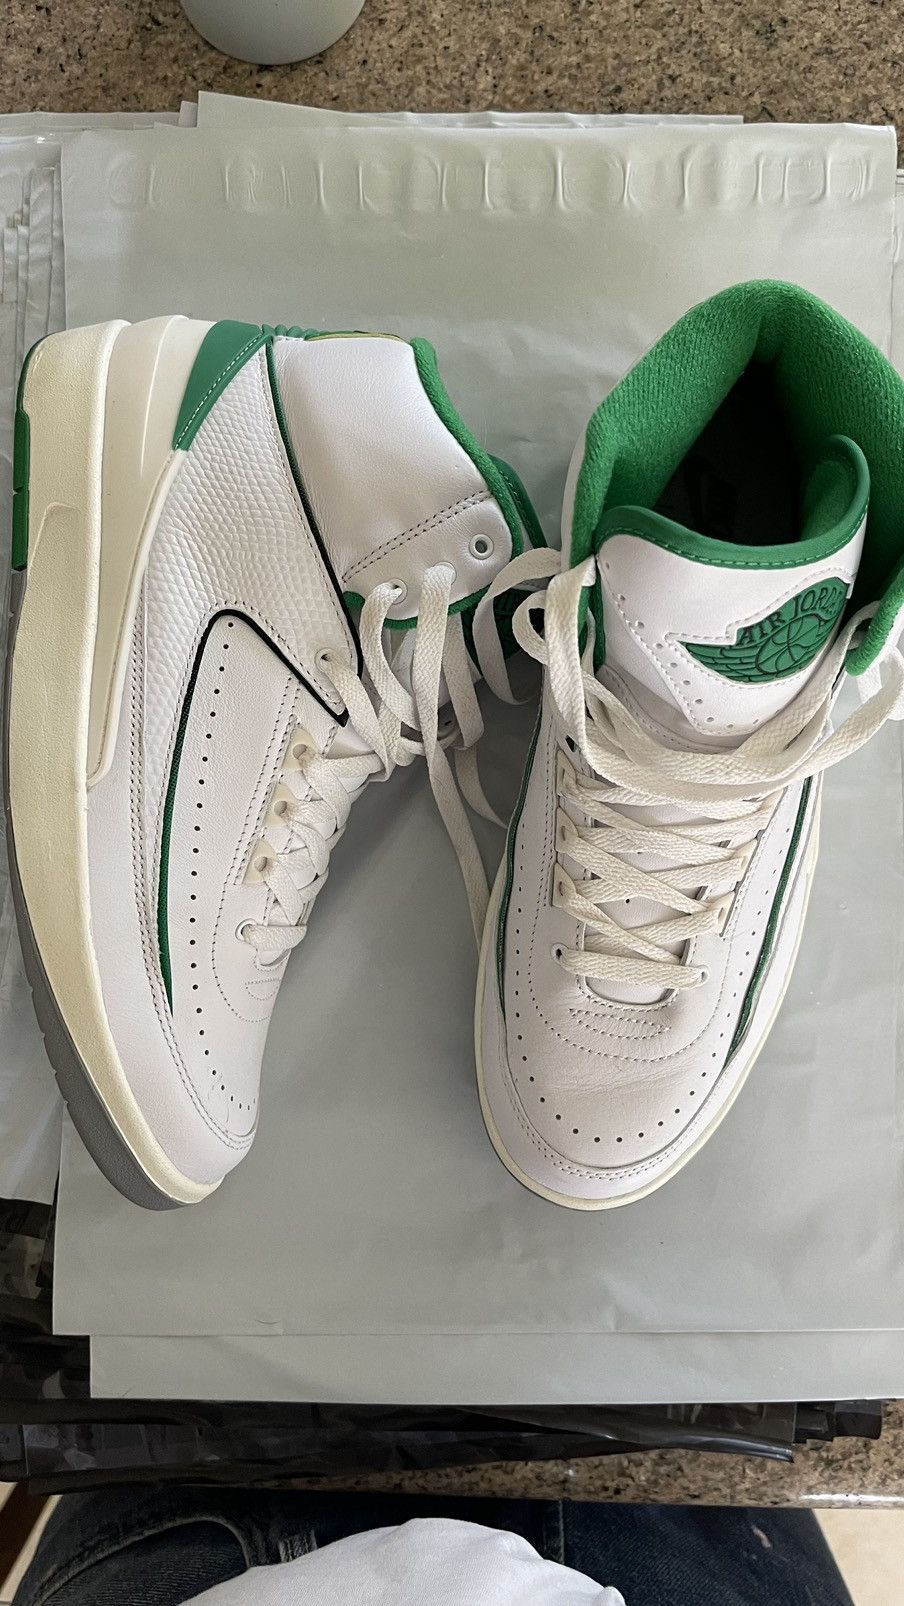 Pre-owned Jordan Brand 2 Hi Green Shoes In White